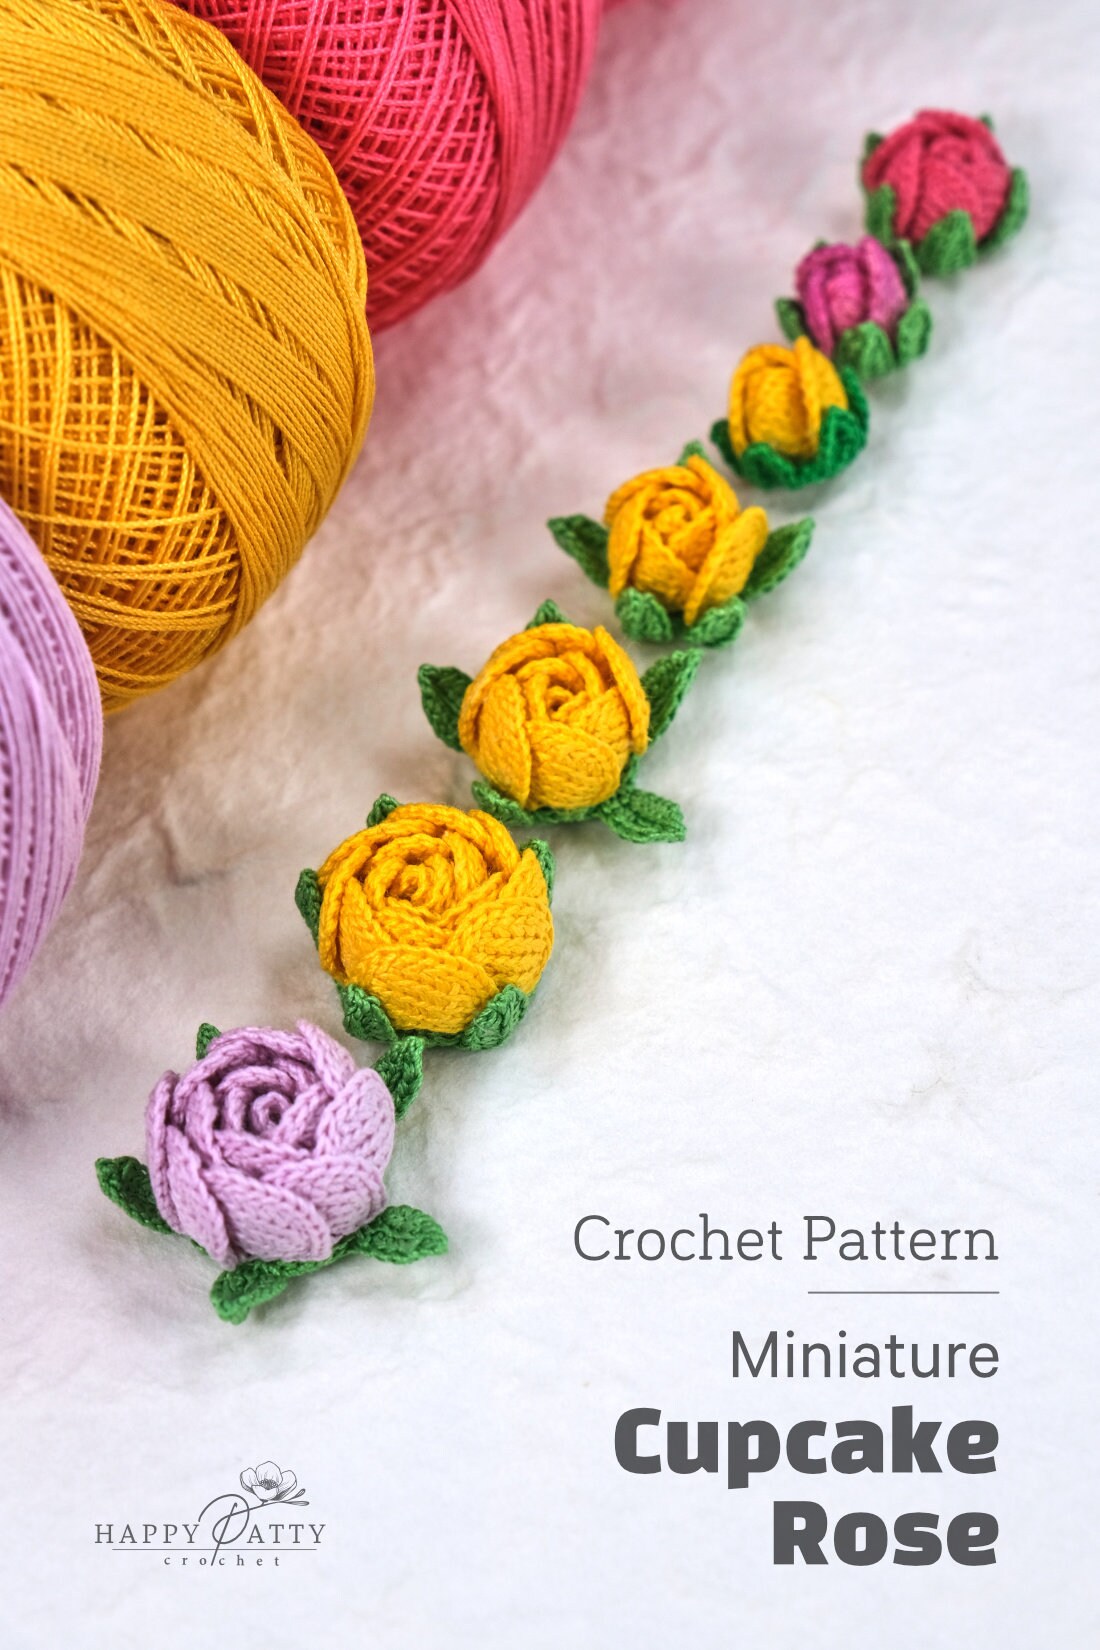 Crochet Mini Cupcake Rose Pattern - Crochet Flower Pattern for a Cupcake Rose Applique